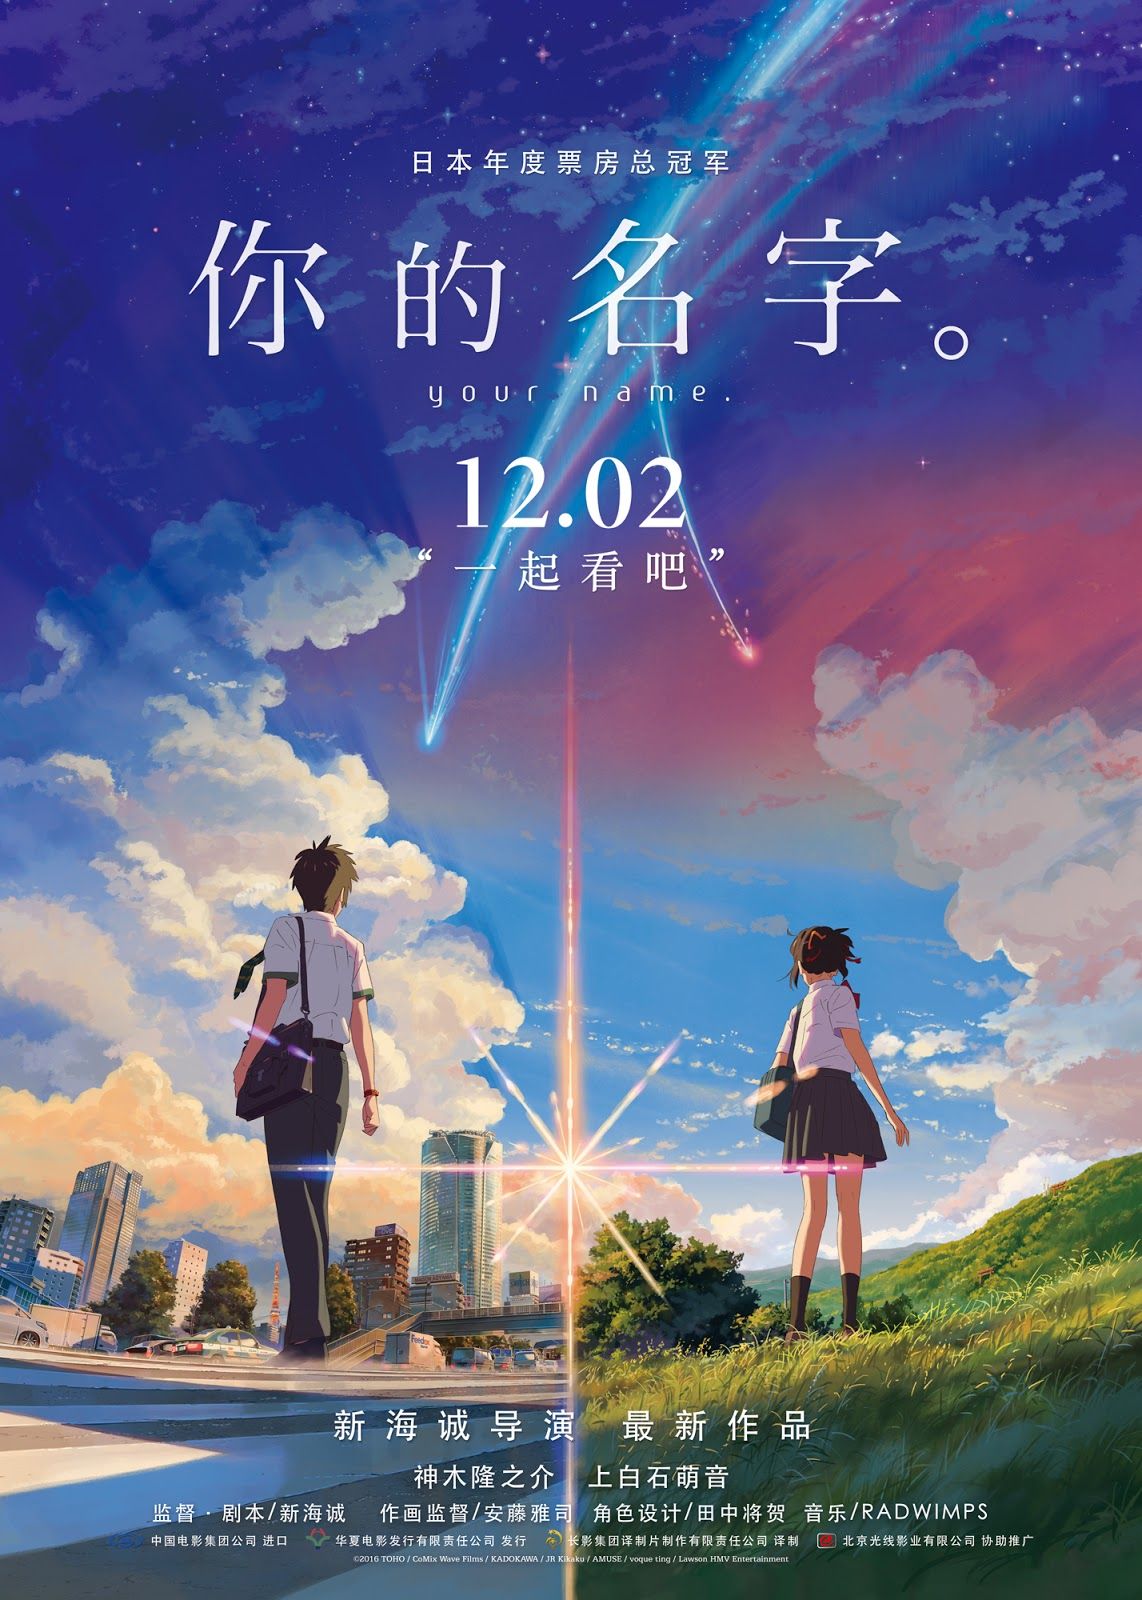 Top 15 Best New Romance Anime Announced For 2023| Otaku Fanatic